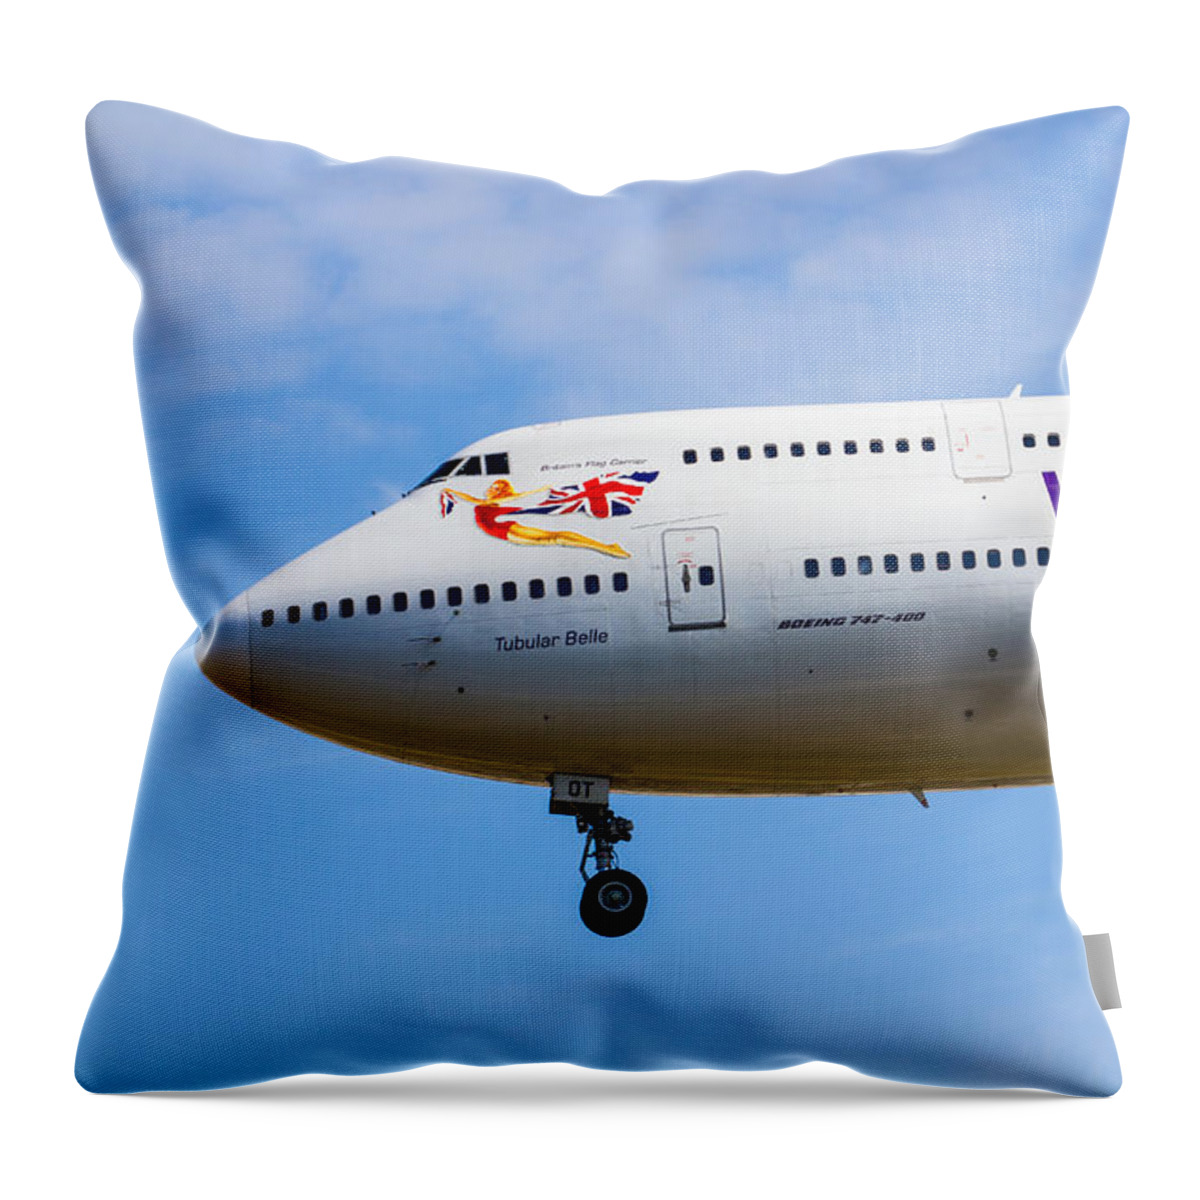 Virgin Throw Pillow featuring the photograph A Virgin Atlantic Boeing 747 #1 by David Pyatt